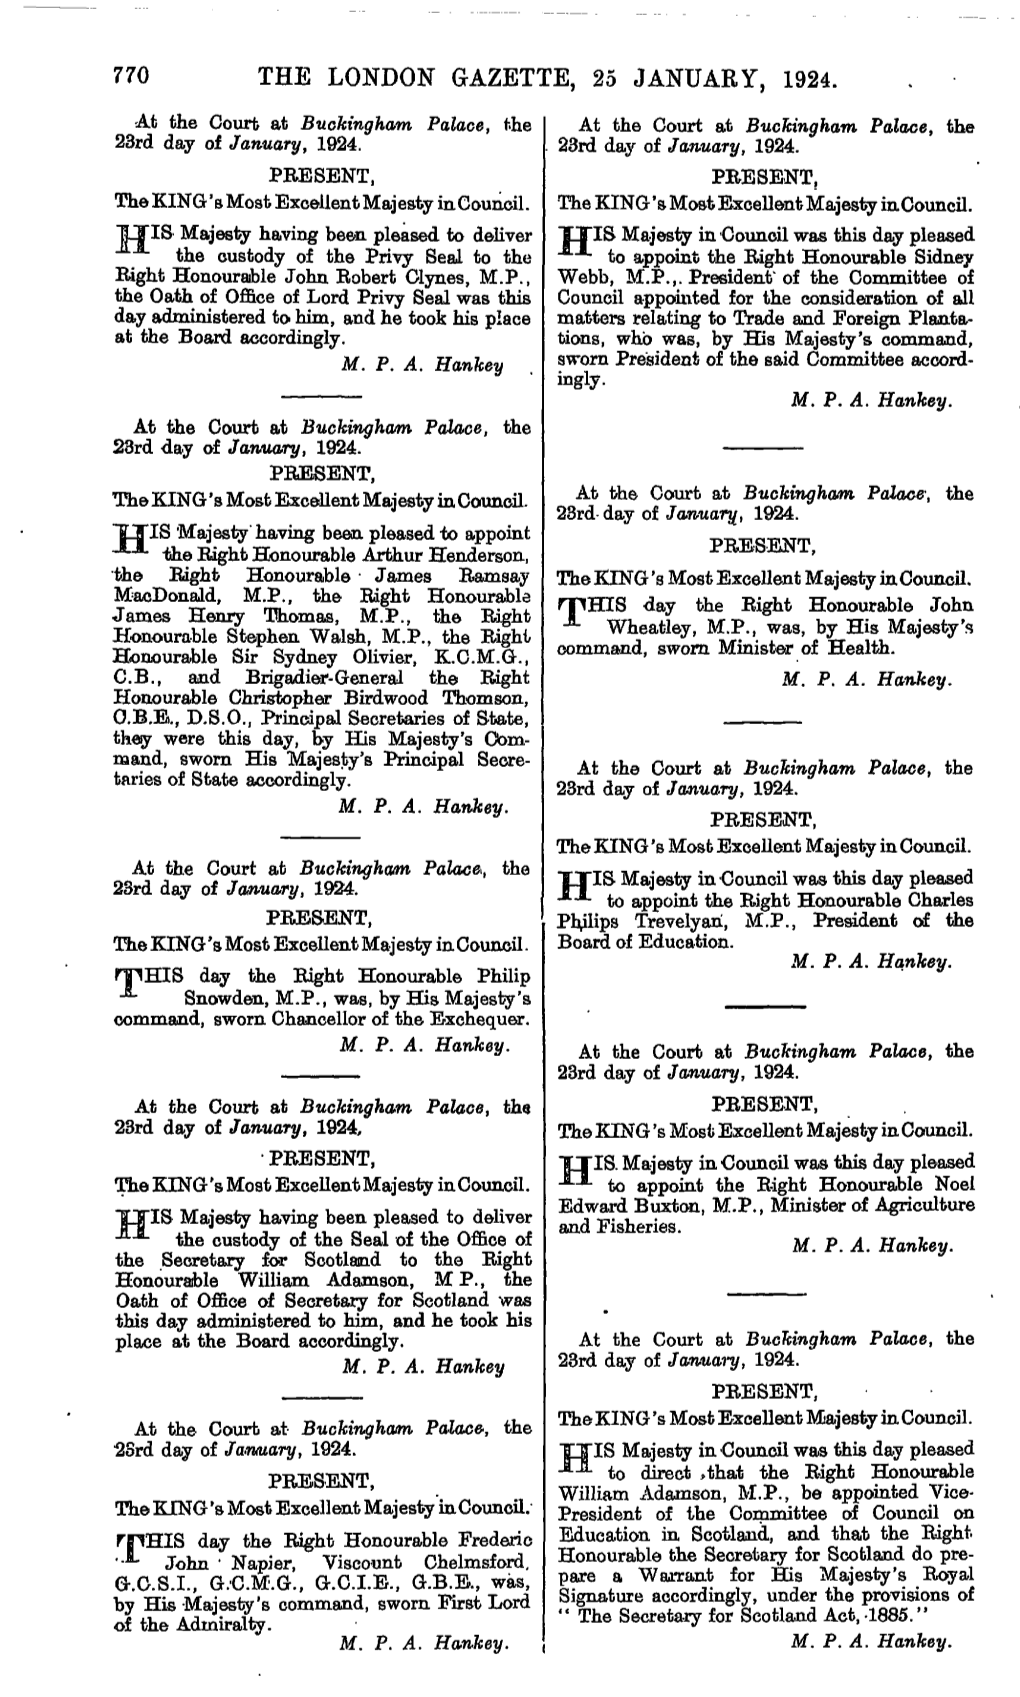 The London Gazette, 25 January, 1924